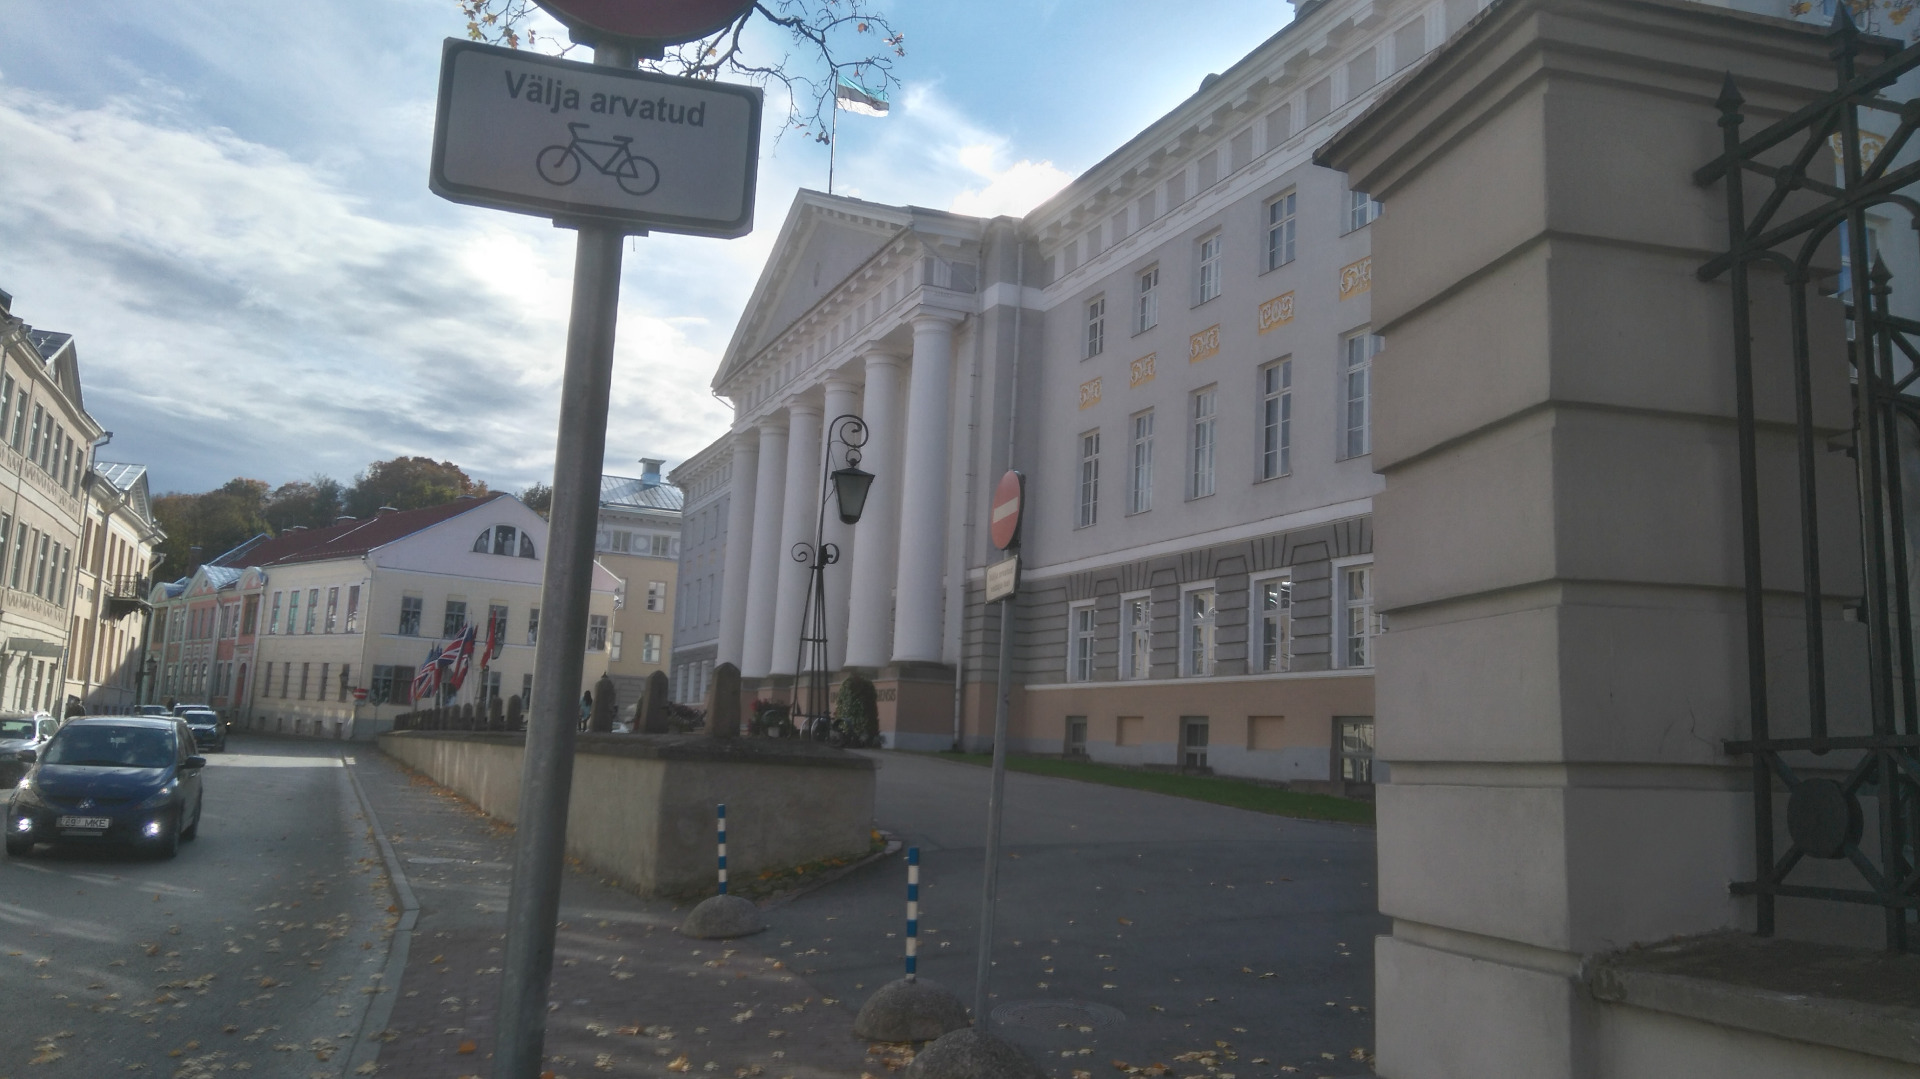 Tartu. The main building of the University of Tartu during the 300th anniversary of the University of Tartu rephoto